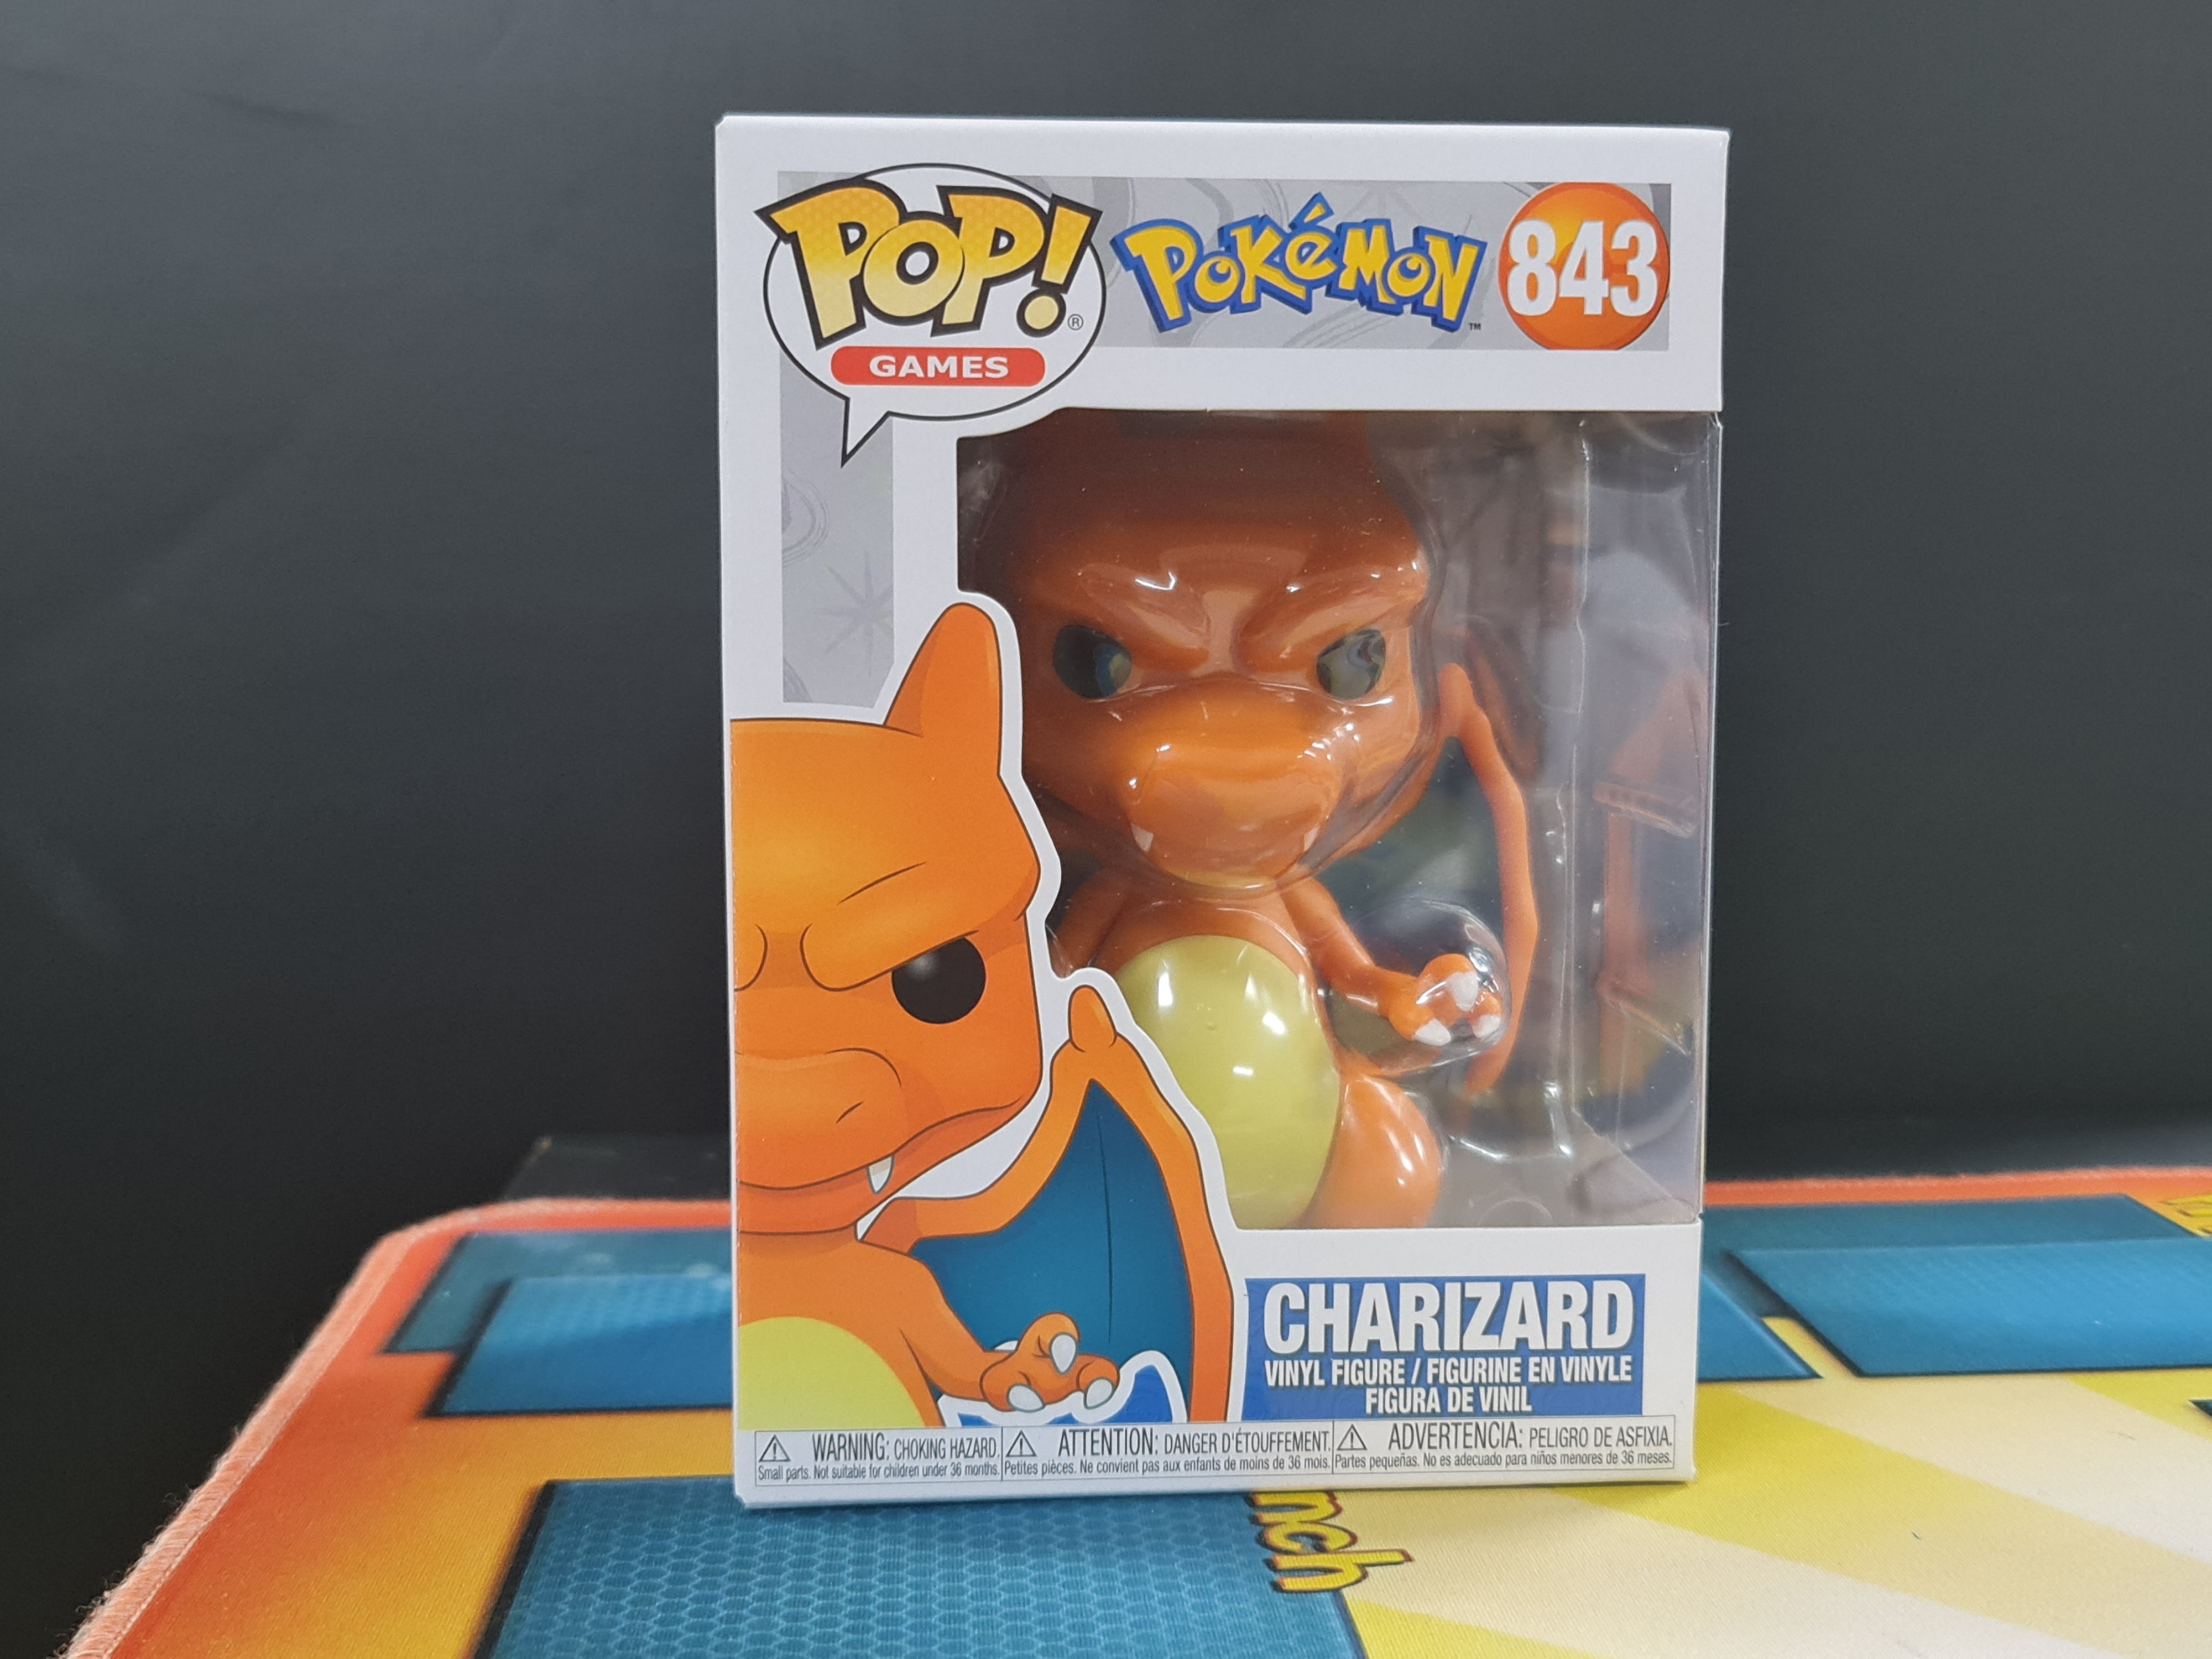 Pokemon - Charizard Metallic - POP! Games action figure 843